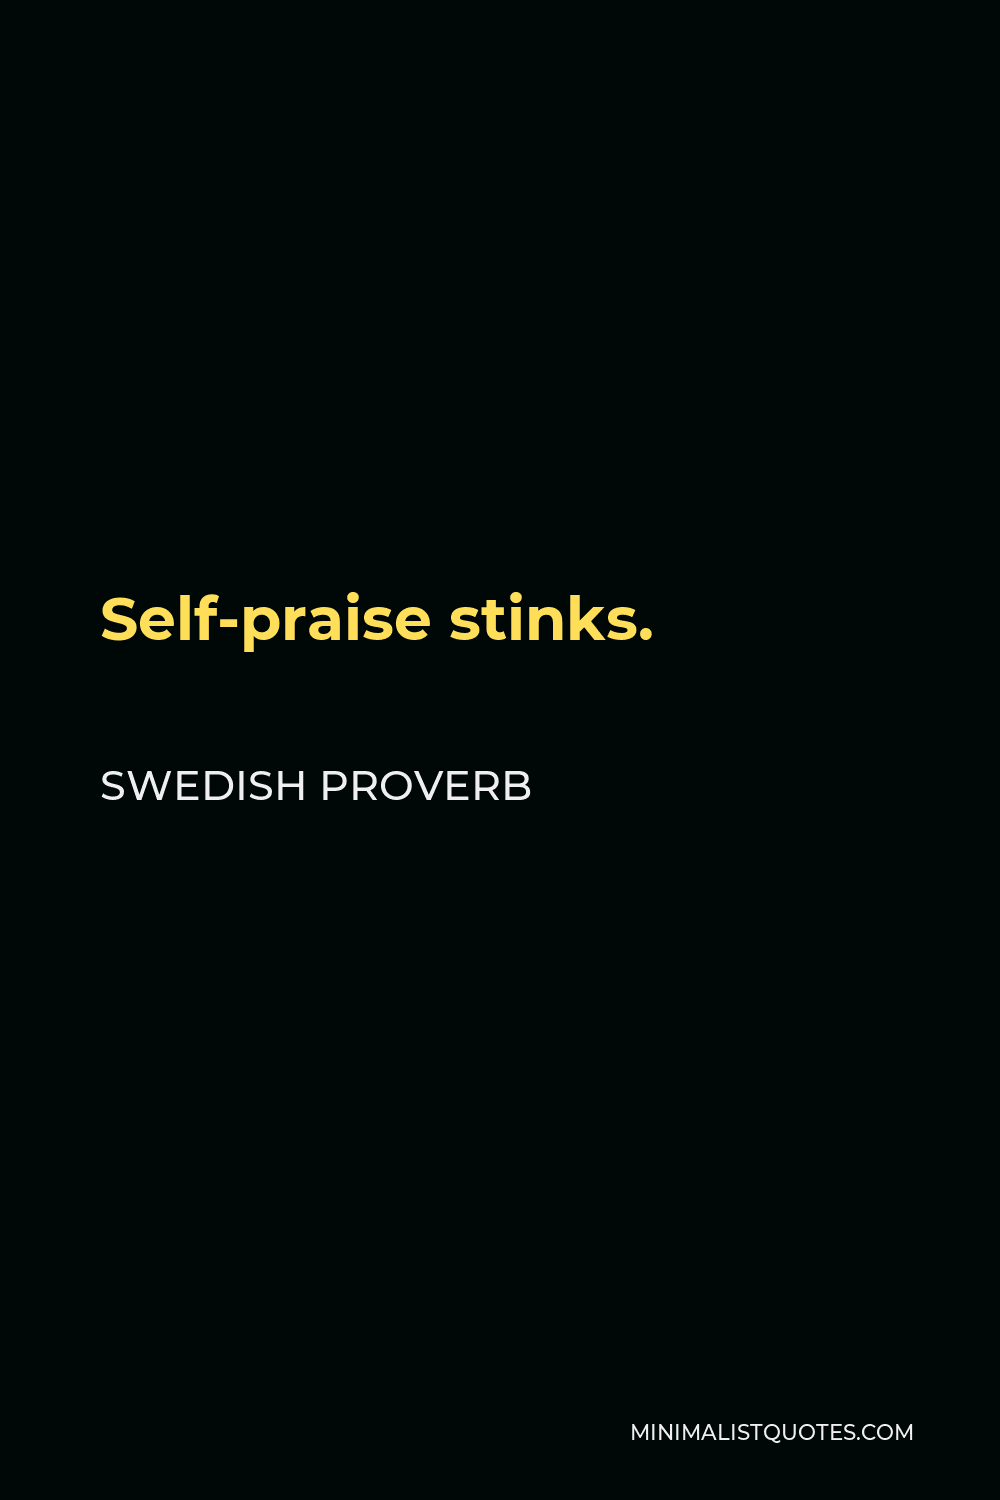 Swedish Proverb Quote - Self-praise stinks.